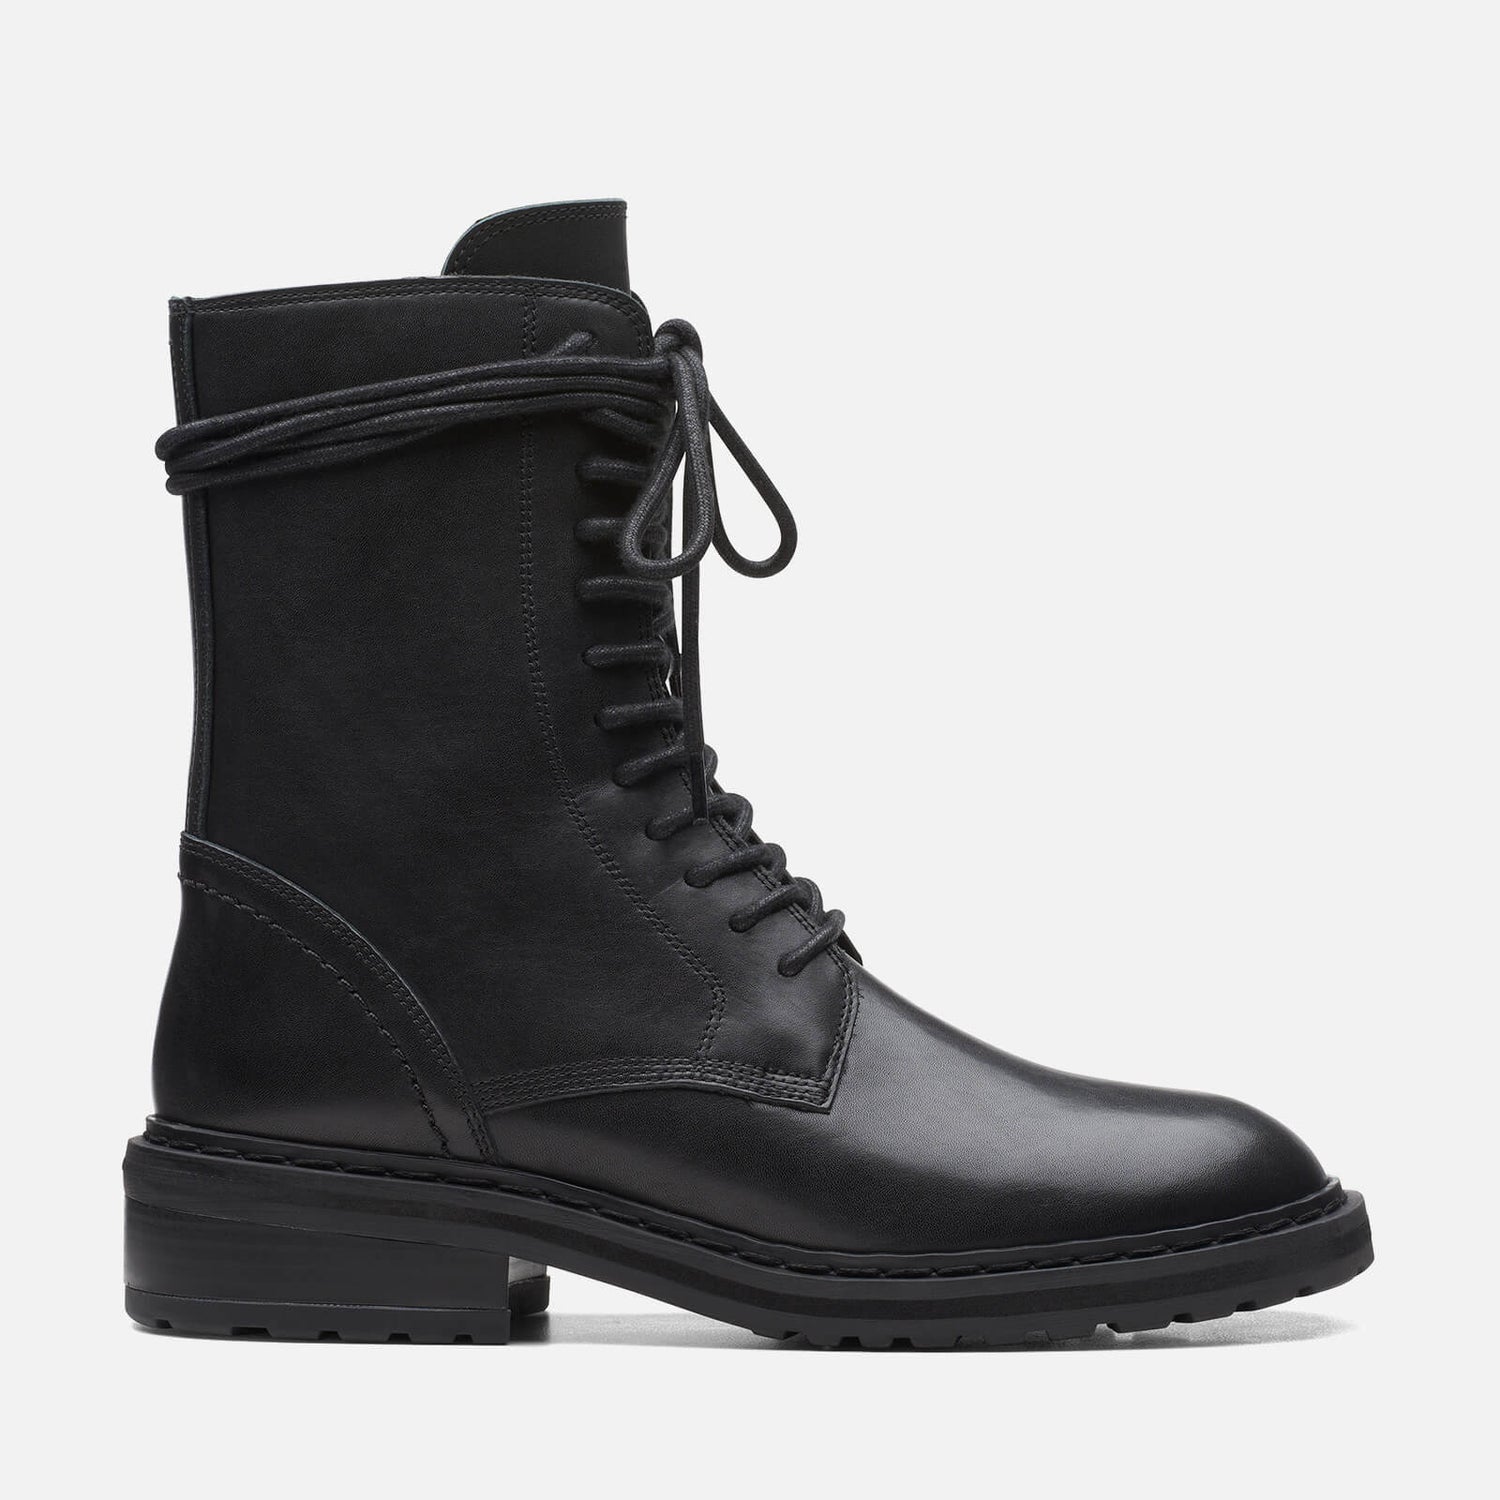 Clarks Tilham Lace Up Leather Boots - UK 3